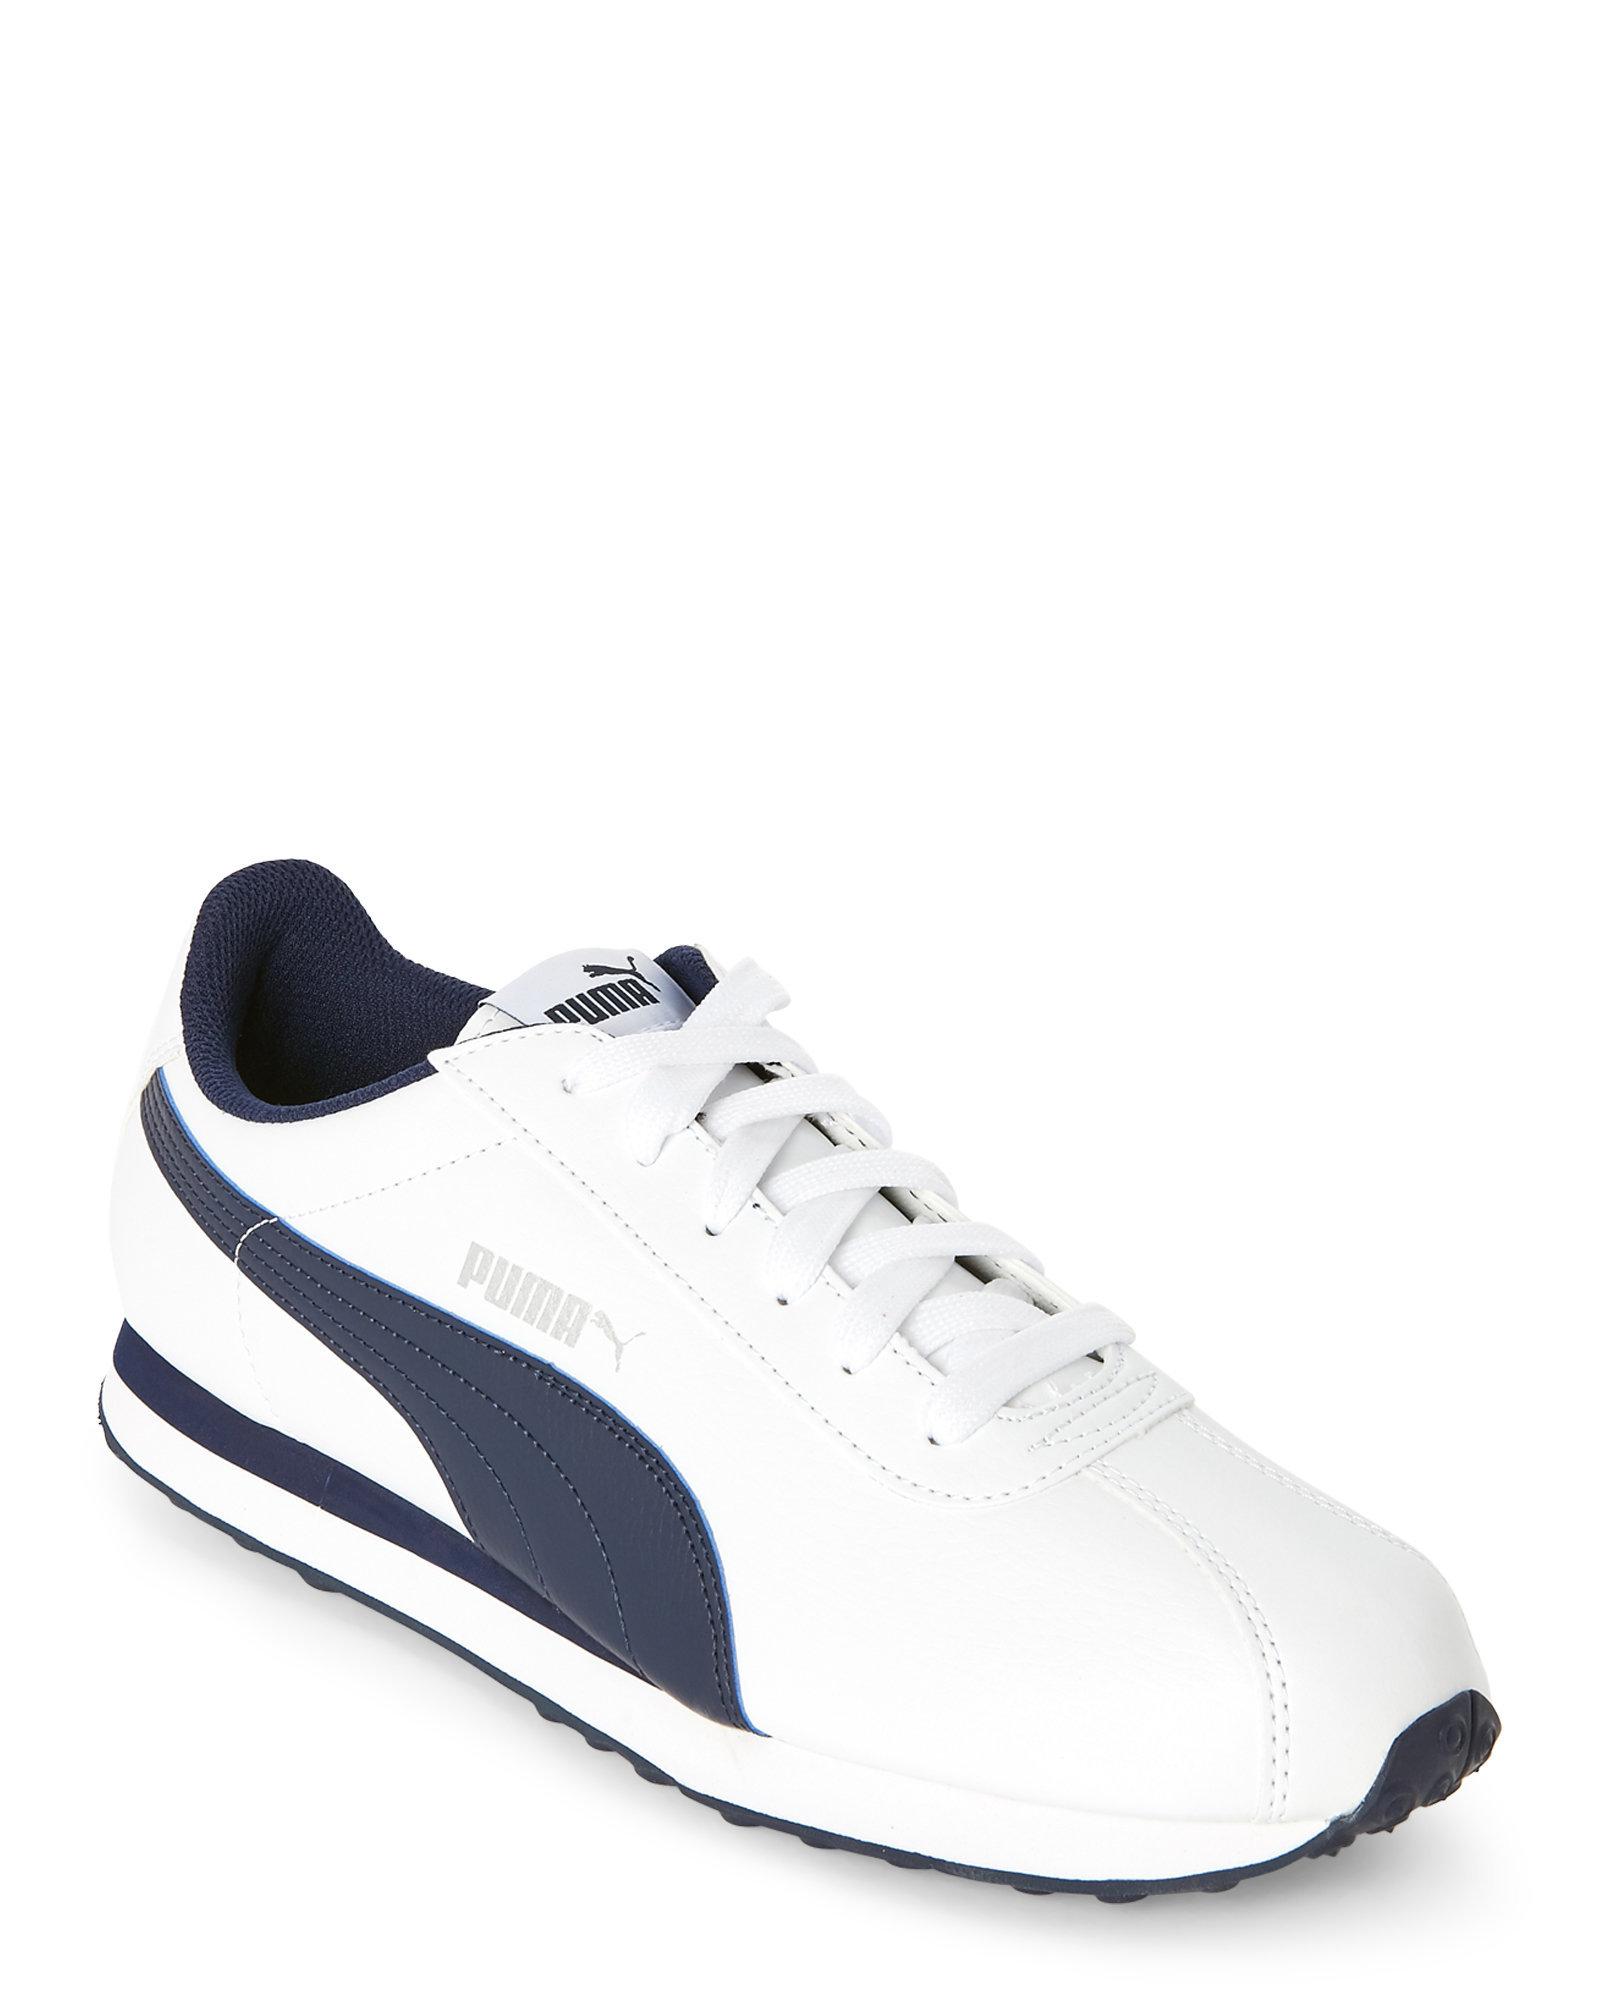 white and blue puma shoes